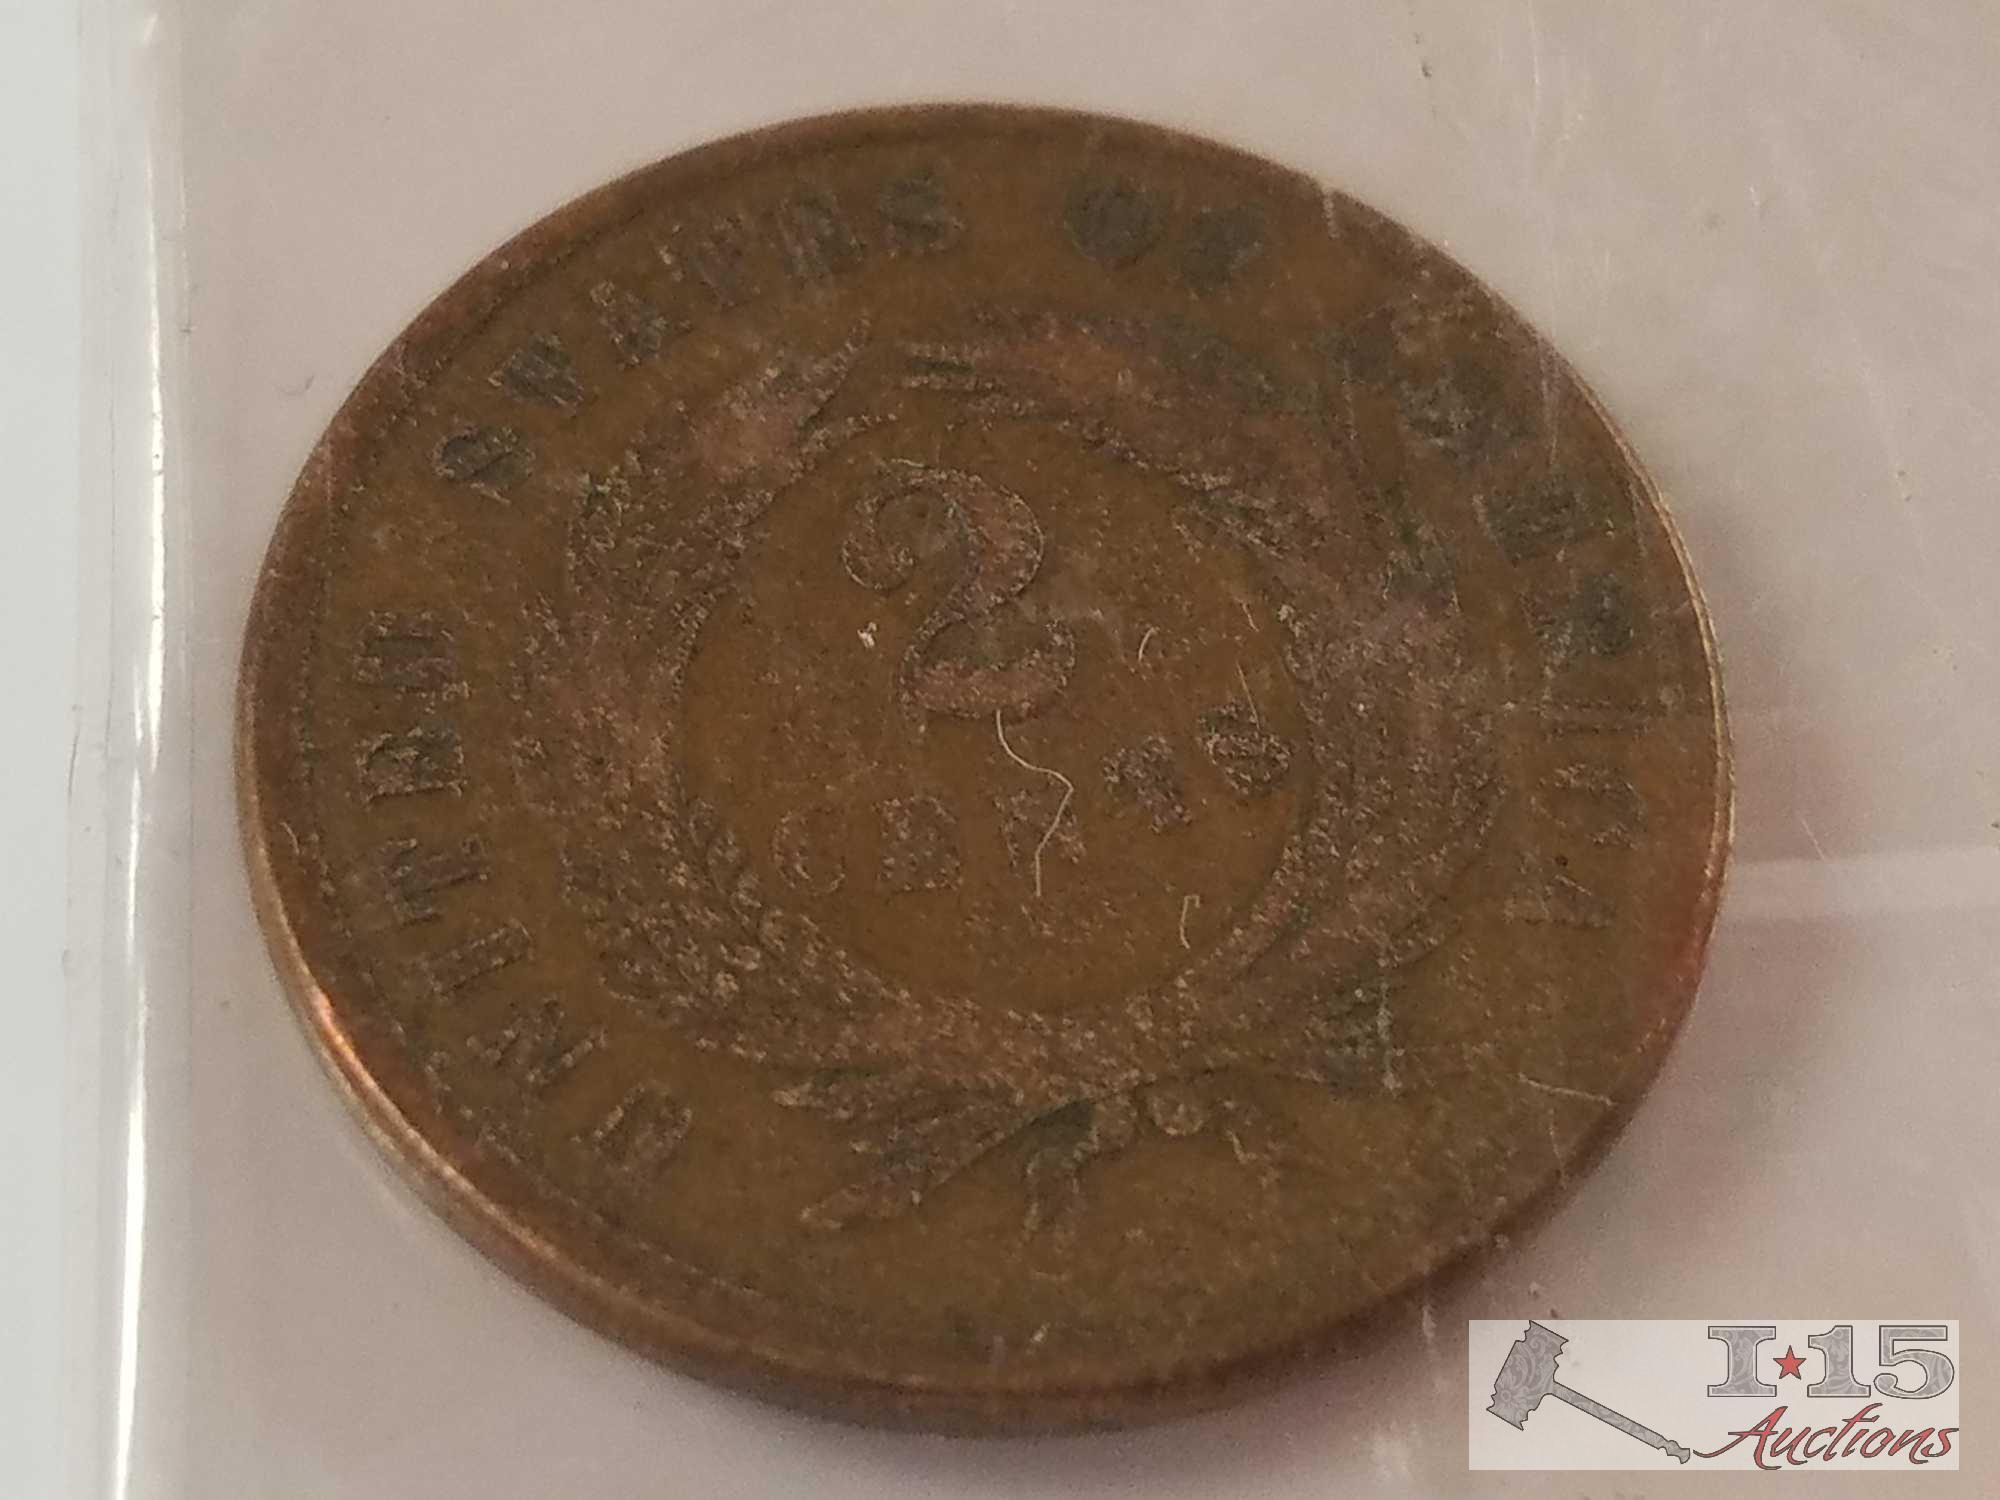 Four Two-Cent coins: quantity 3 - 1865, 1869